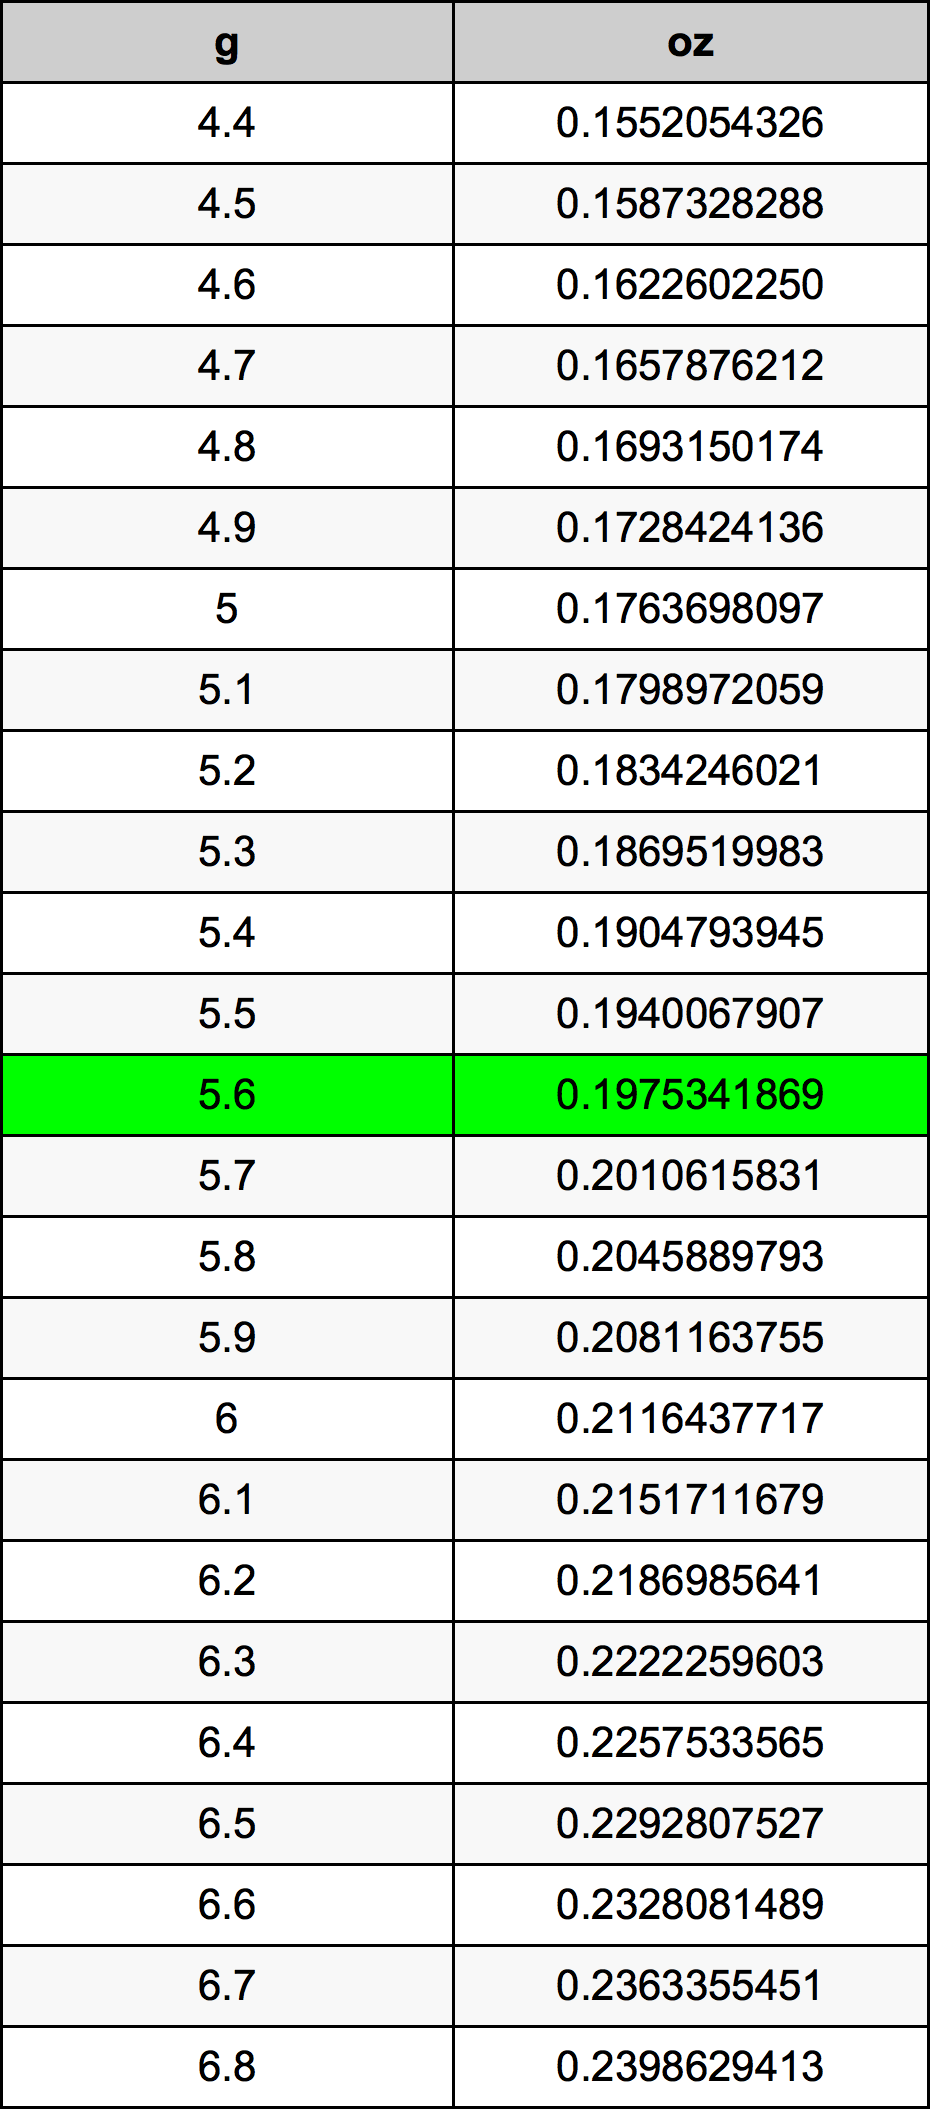 5.6 غرام جدول تحويل